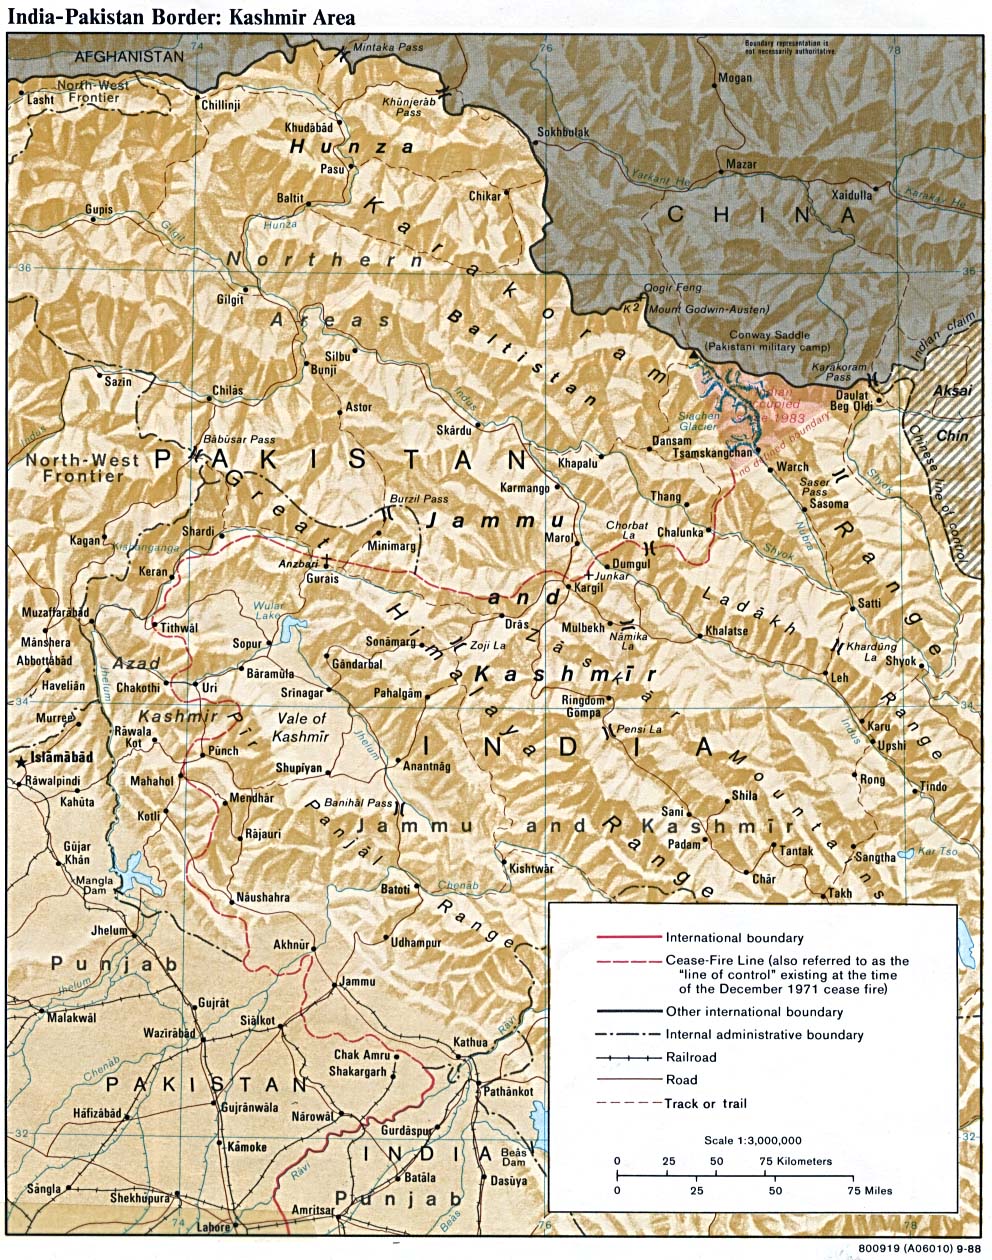 Mapa de la Frontera India - Pakistan en la Región Cachemira